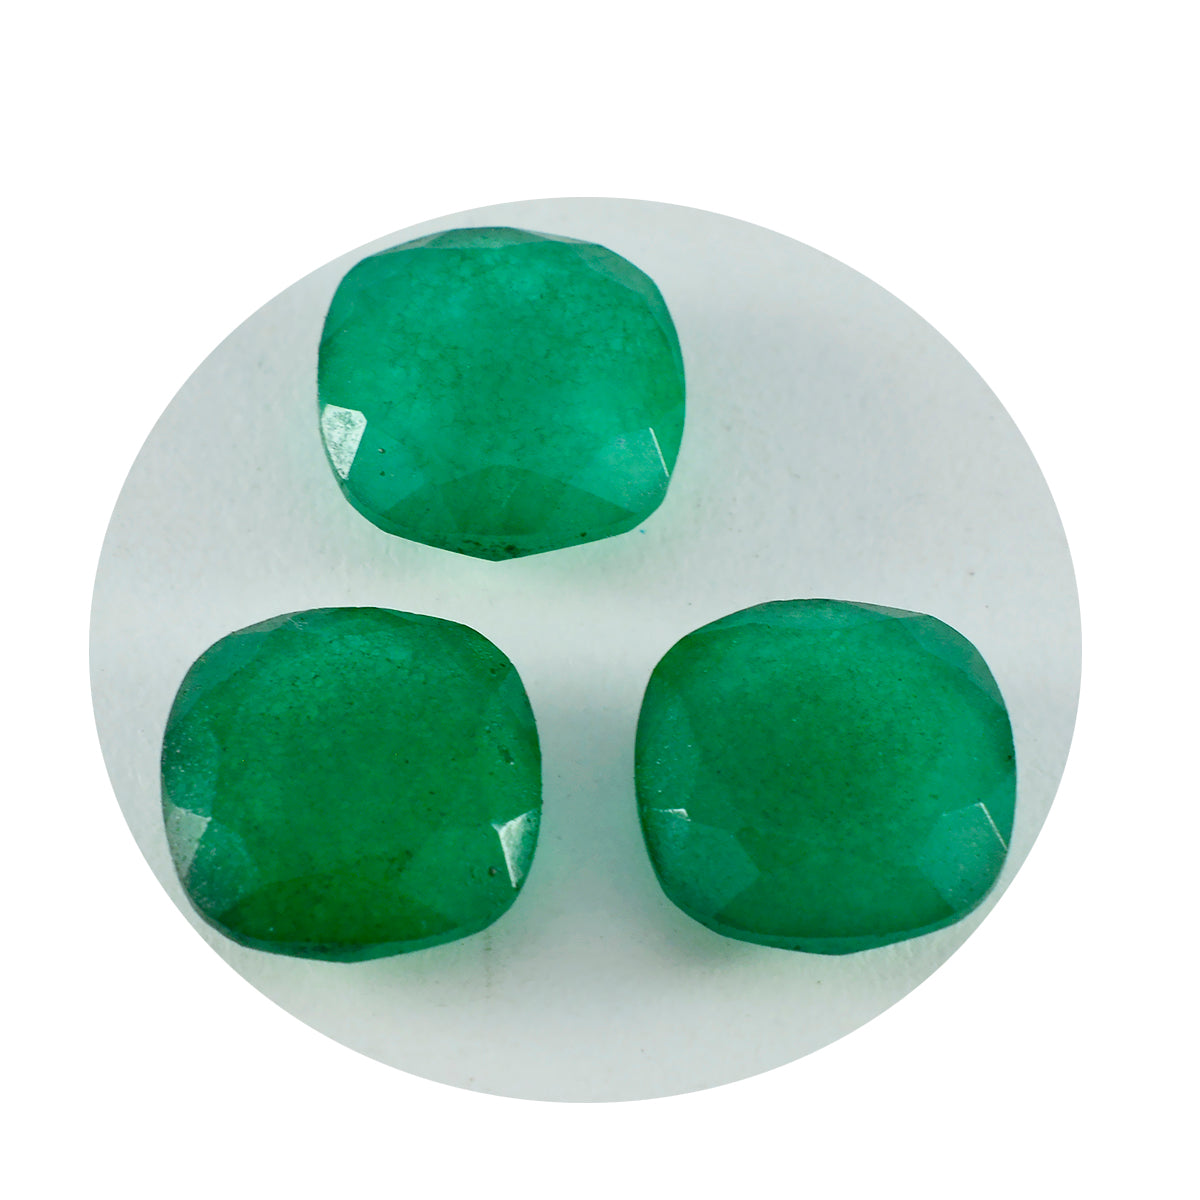 riyogems 1pc リアル グリーン ジャスパー ファセット 9x9 mm クッション形状のかなり品質の石